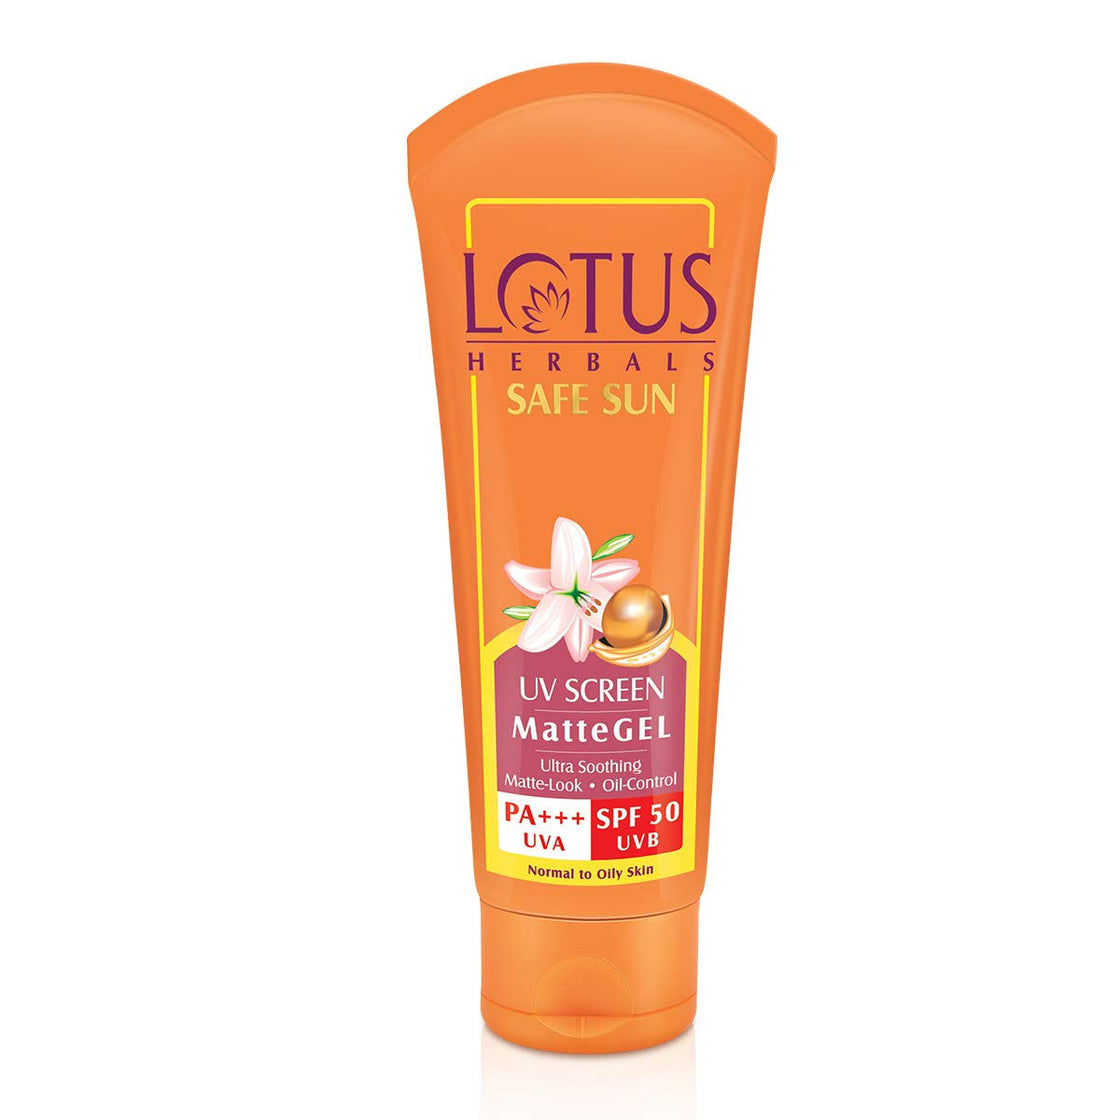 Lotus Herbals Safe Sun MatteGEL Daily Sunscreen SPF 50